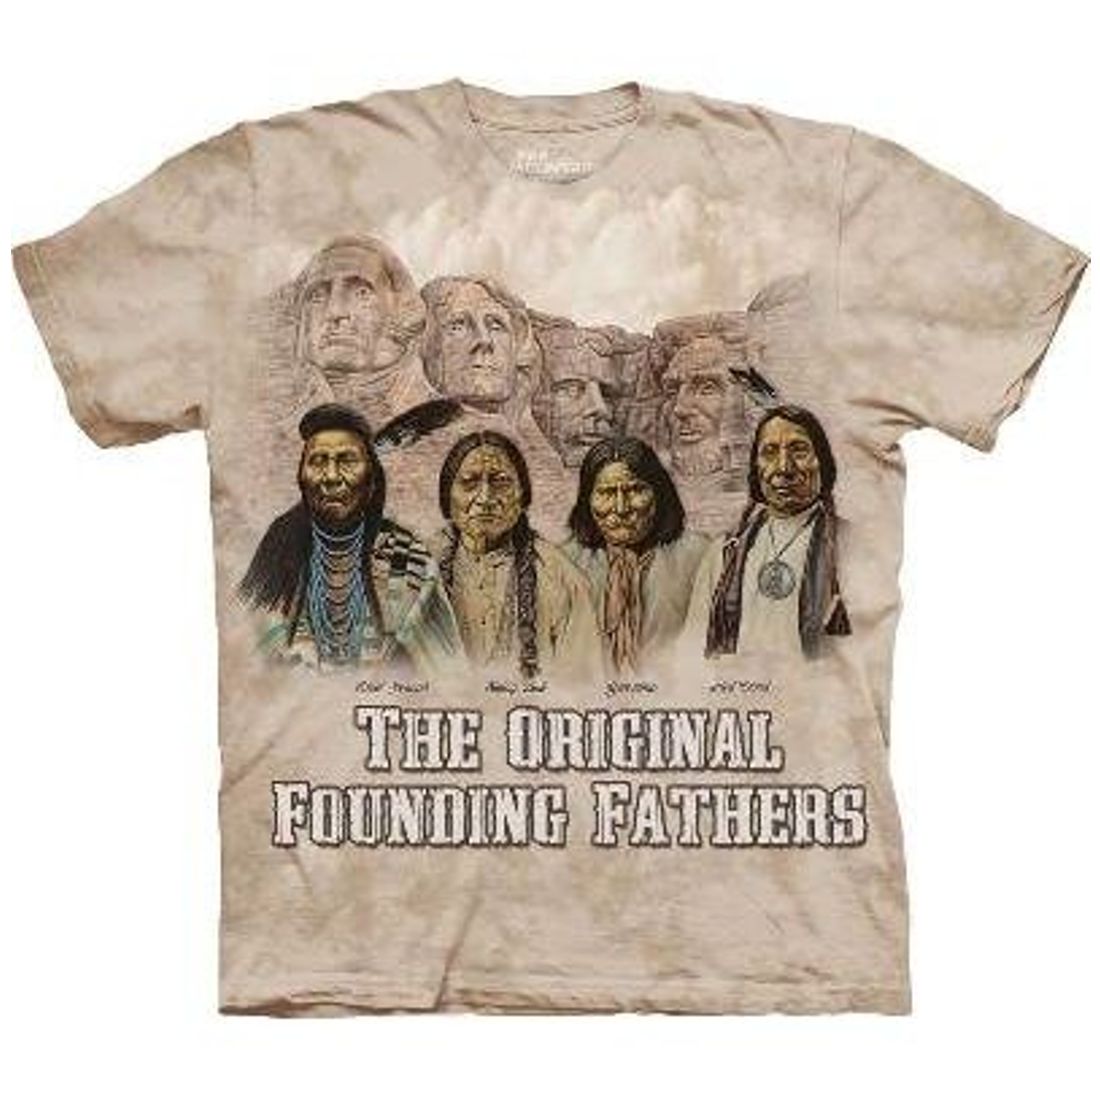 The Mountain T-Shirt - The Originals